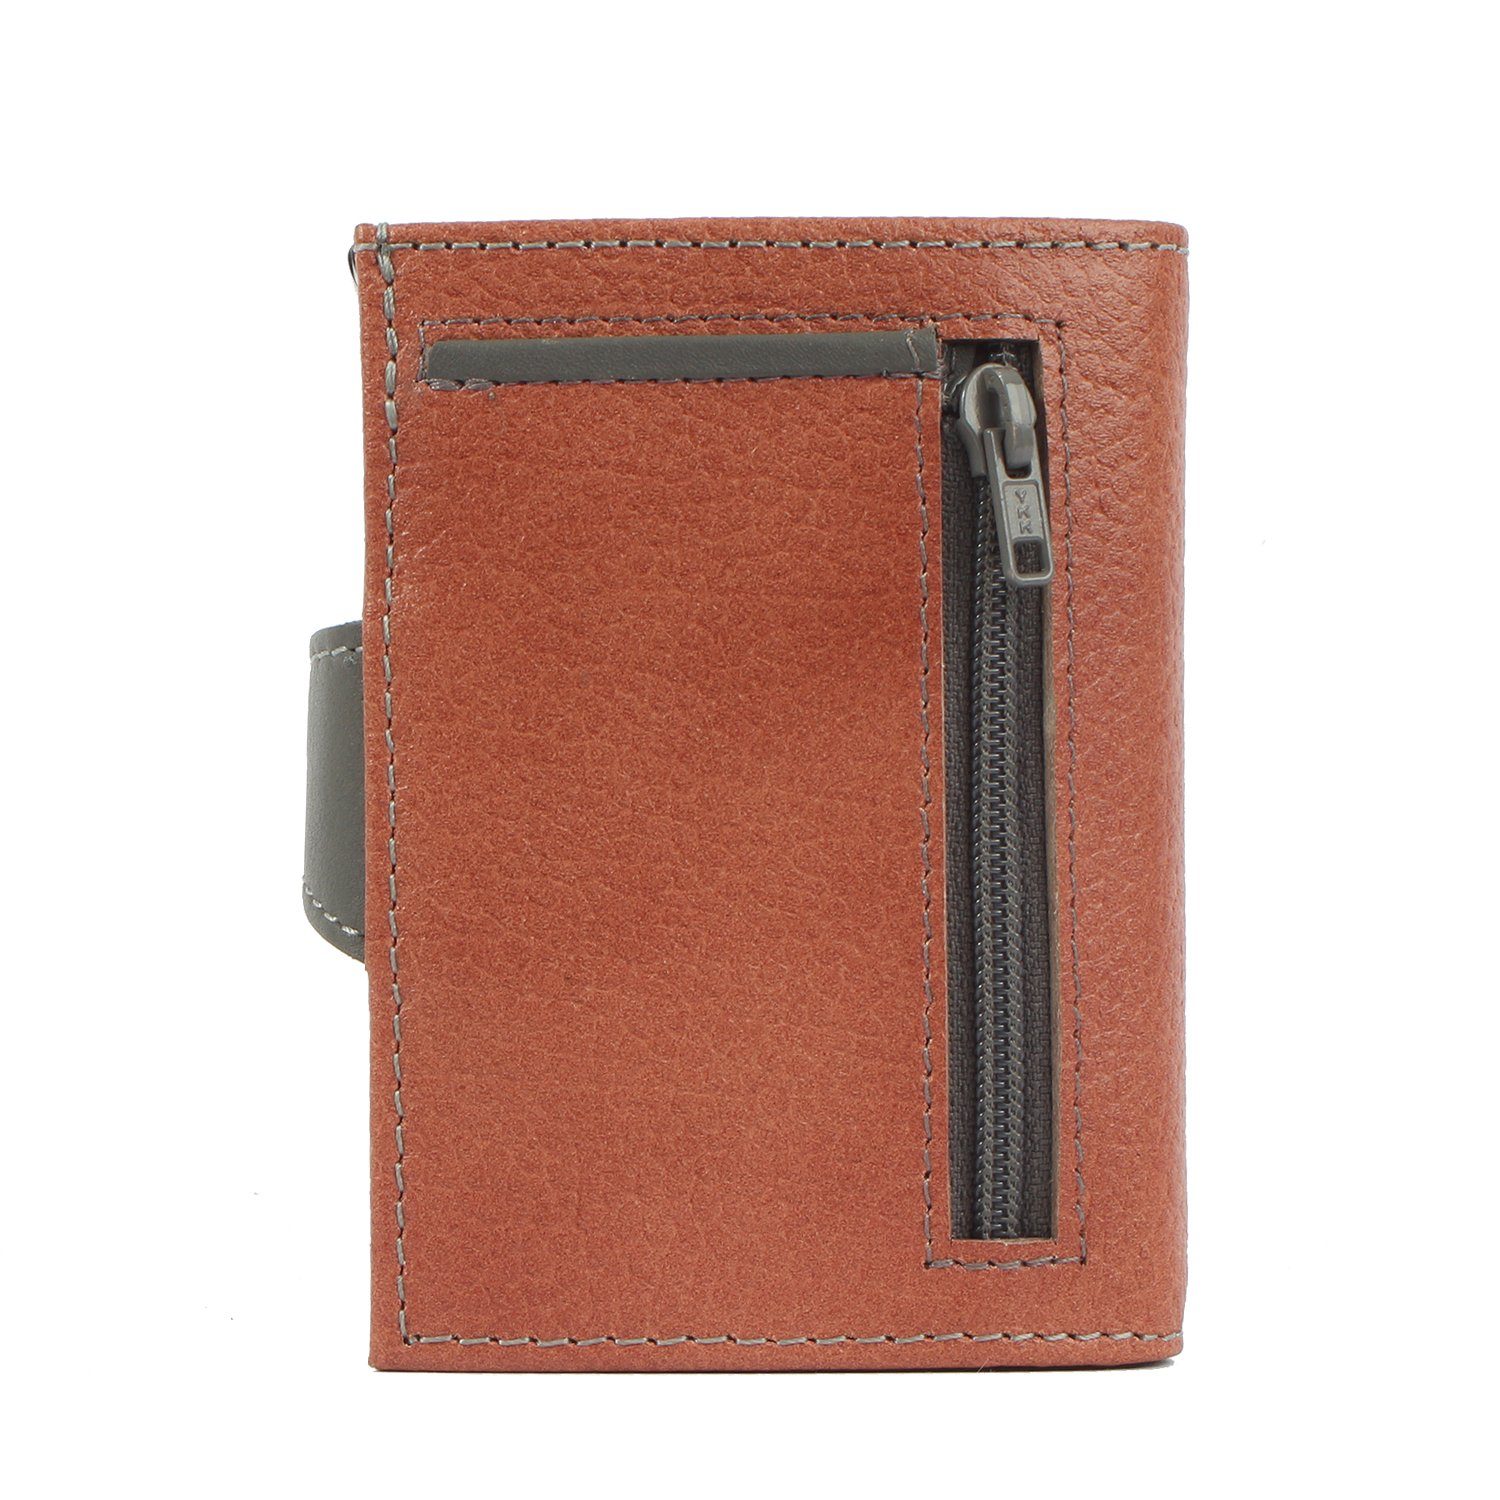 leather, Geldbörse Mini noonyu Upcycling Margelisch RFID aus double Kreditkartenbörse Leder salmon